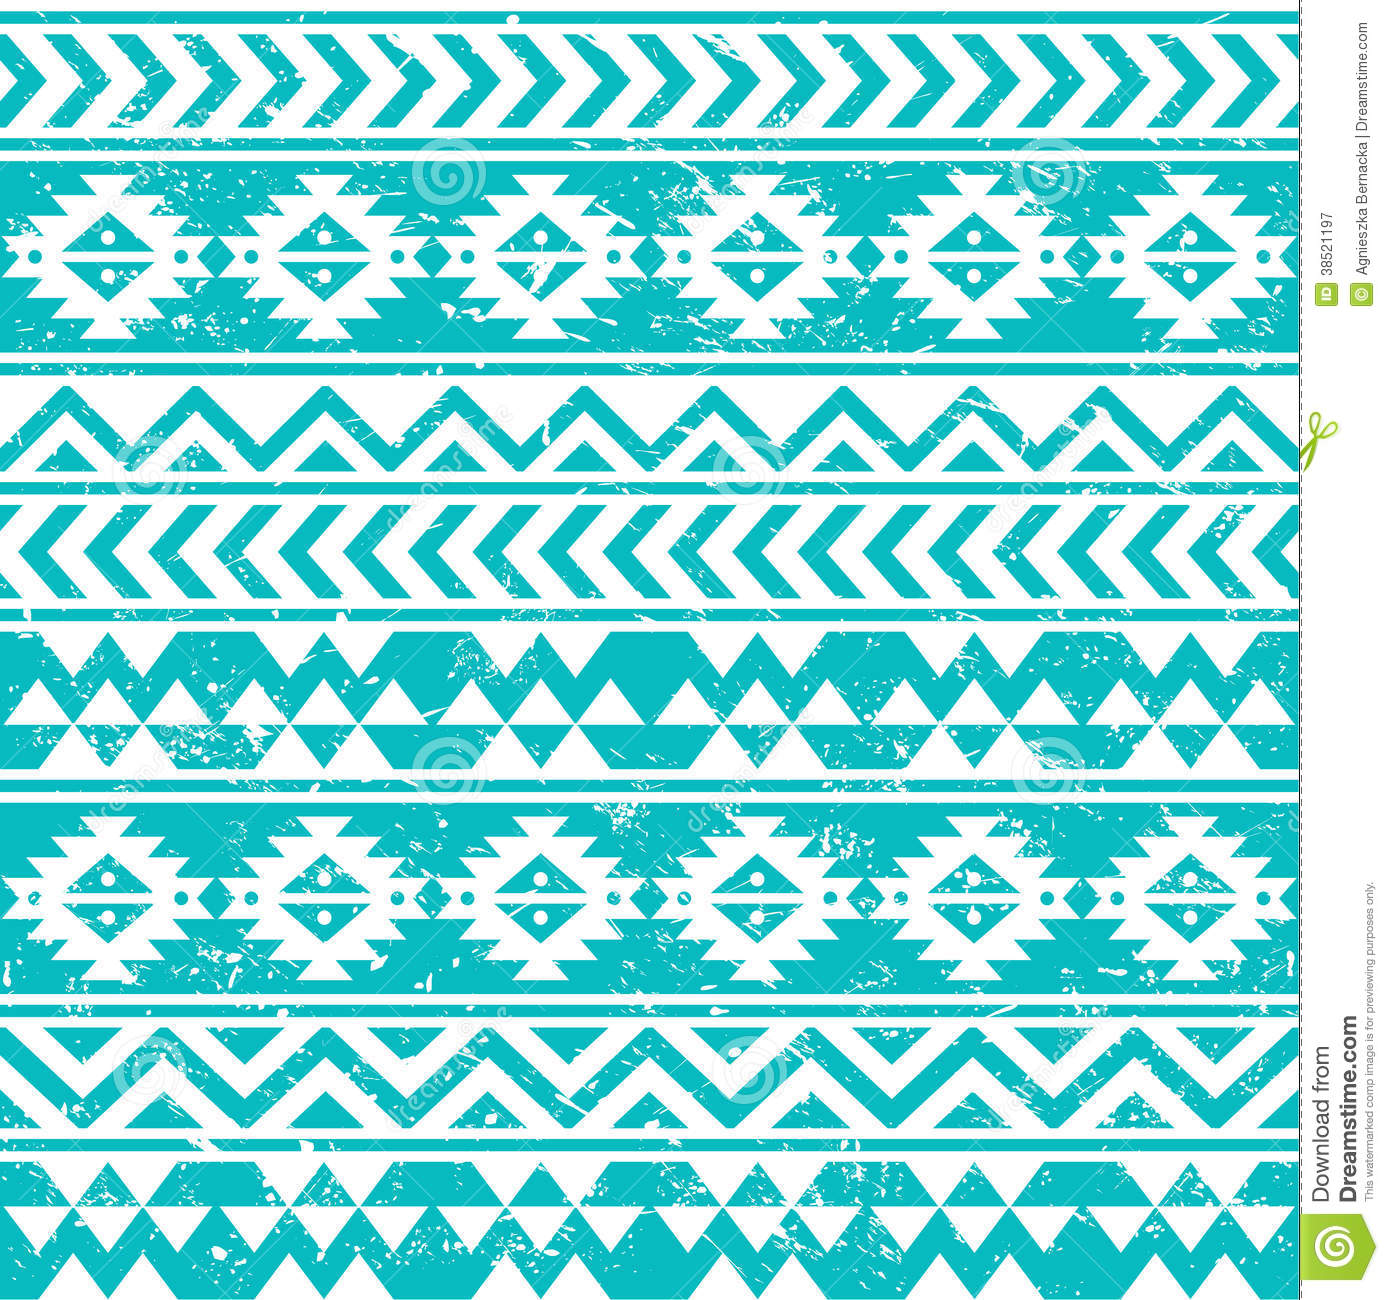 Aztec Patterns Wallpaper Tribal Seamless Grunge